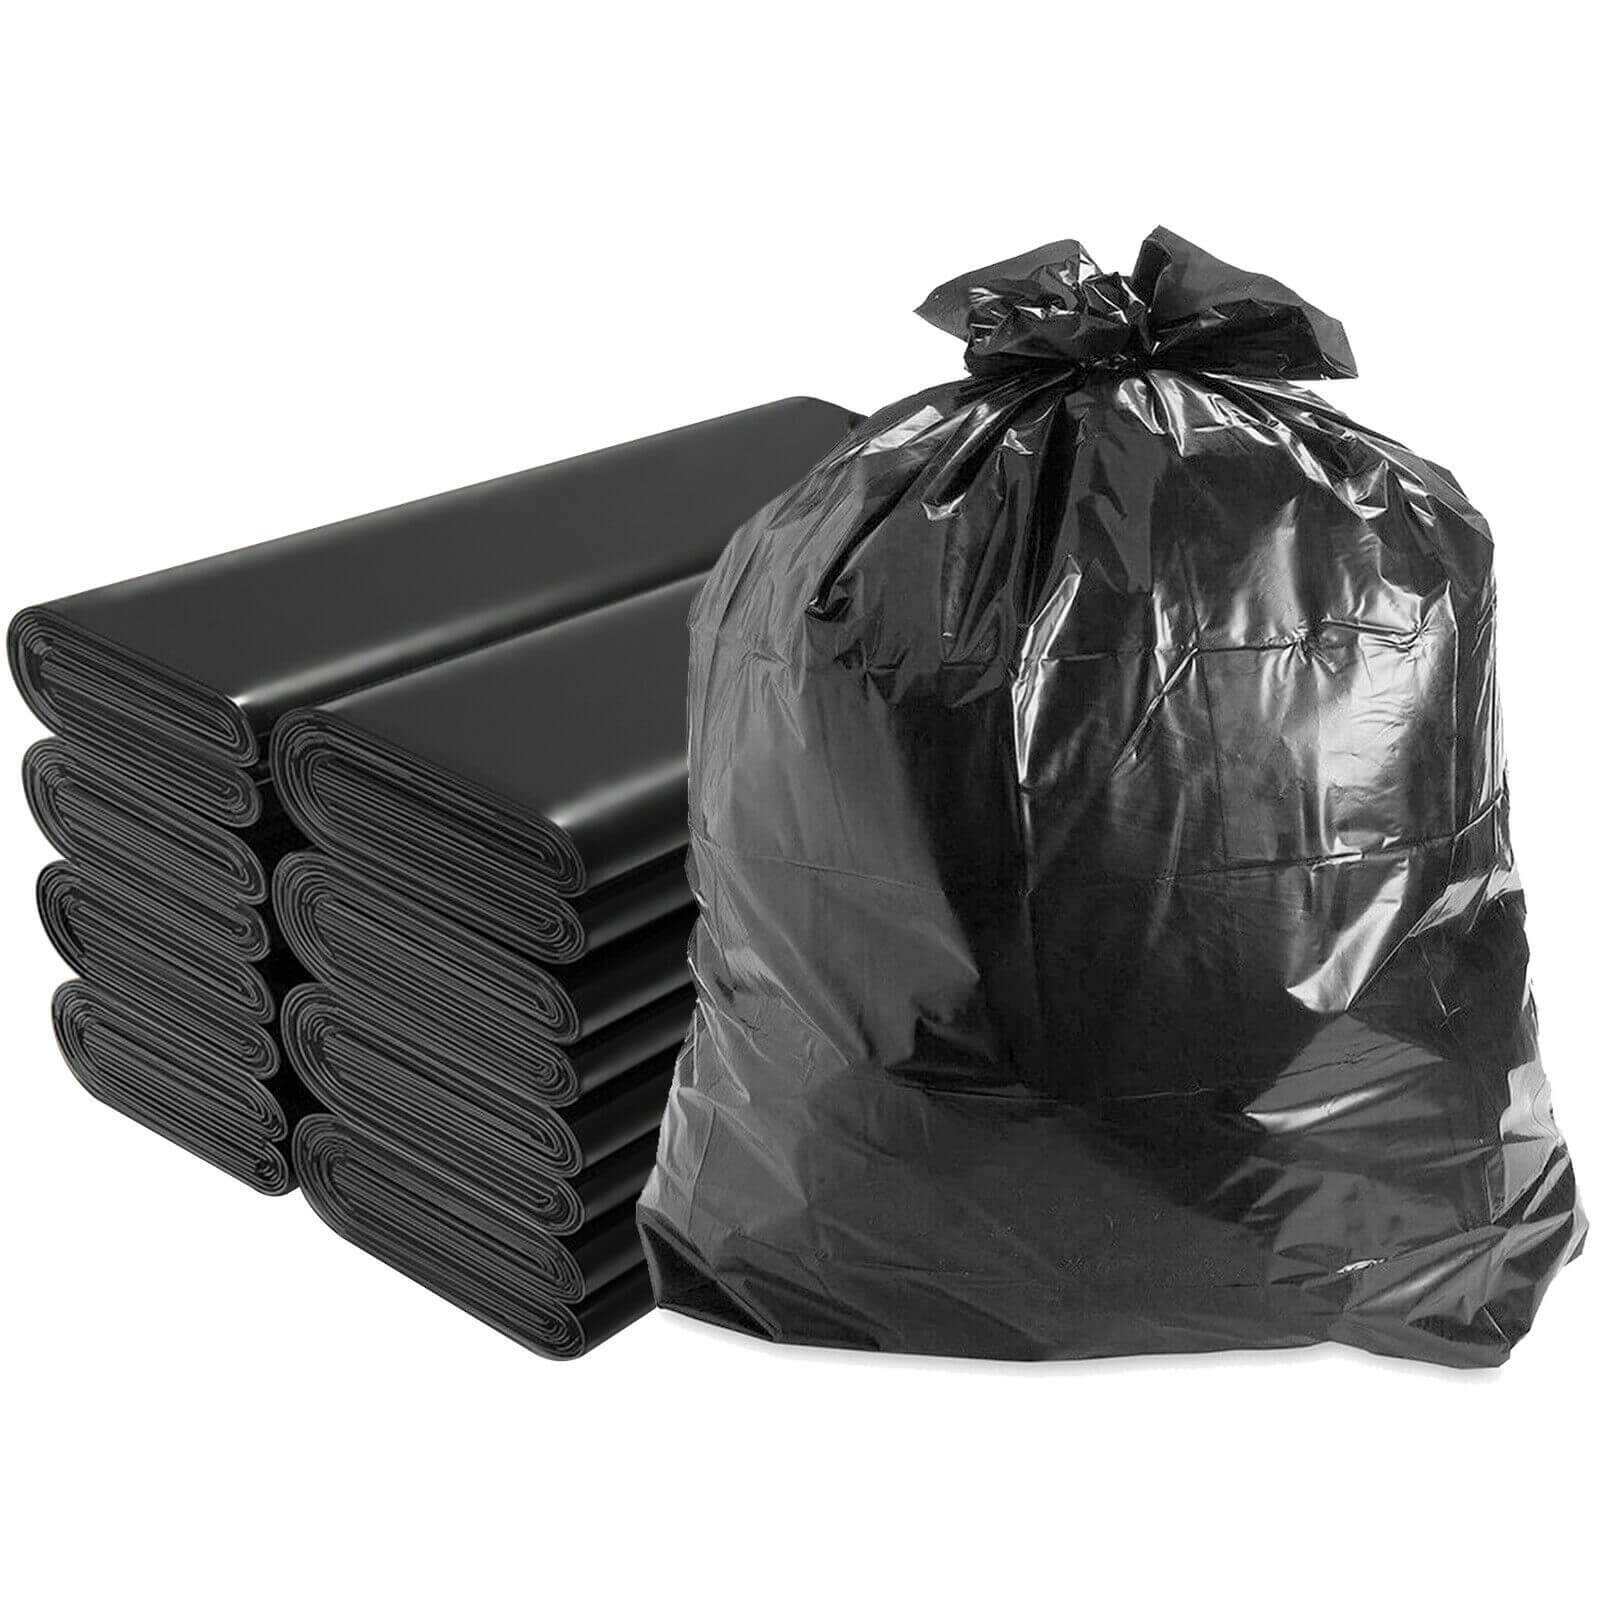  X-Large 65 Gallon Black Trash Bags - Heavy Duty Bags